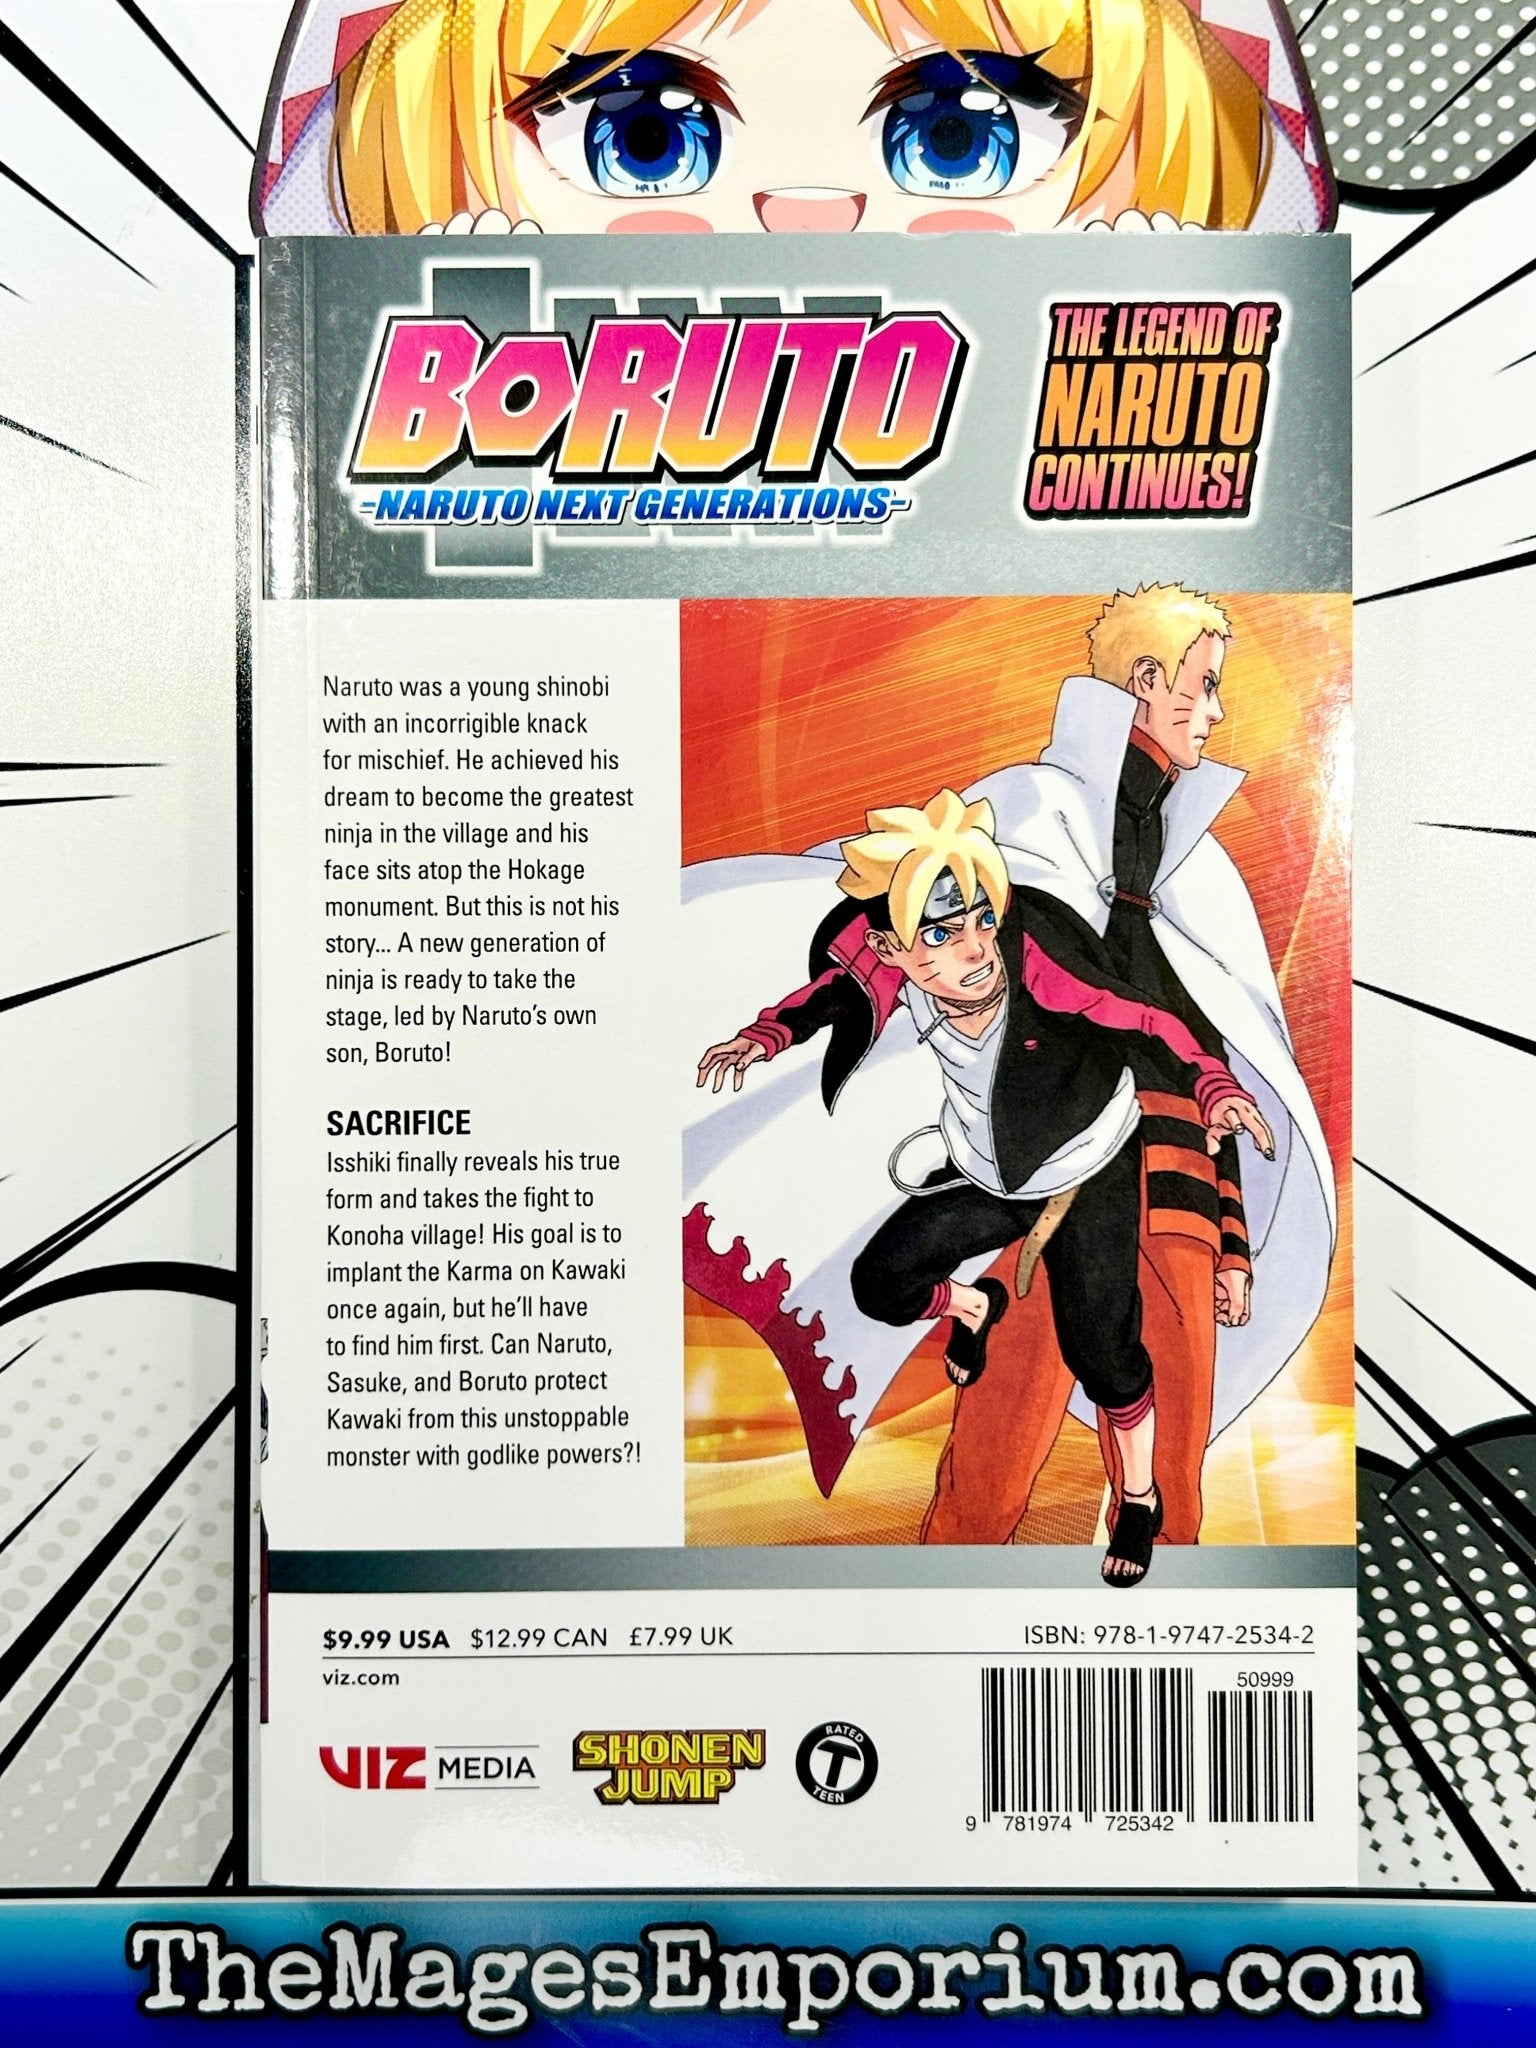 Boruto: Naruto Next Generations, Vol. 9: Volume 9